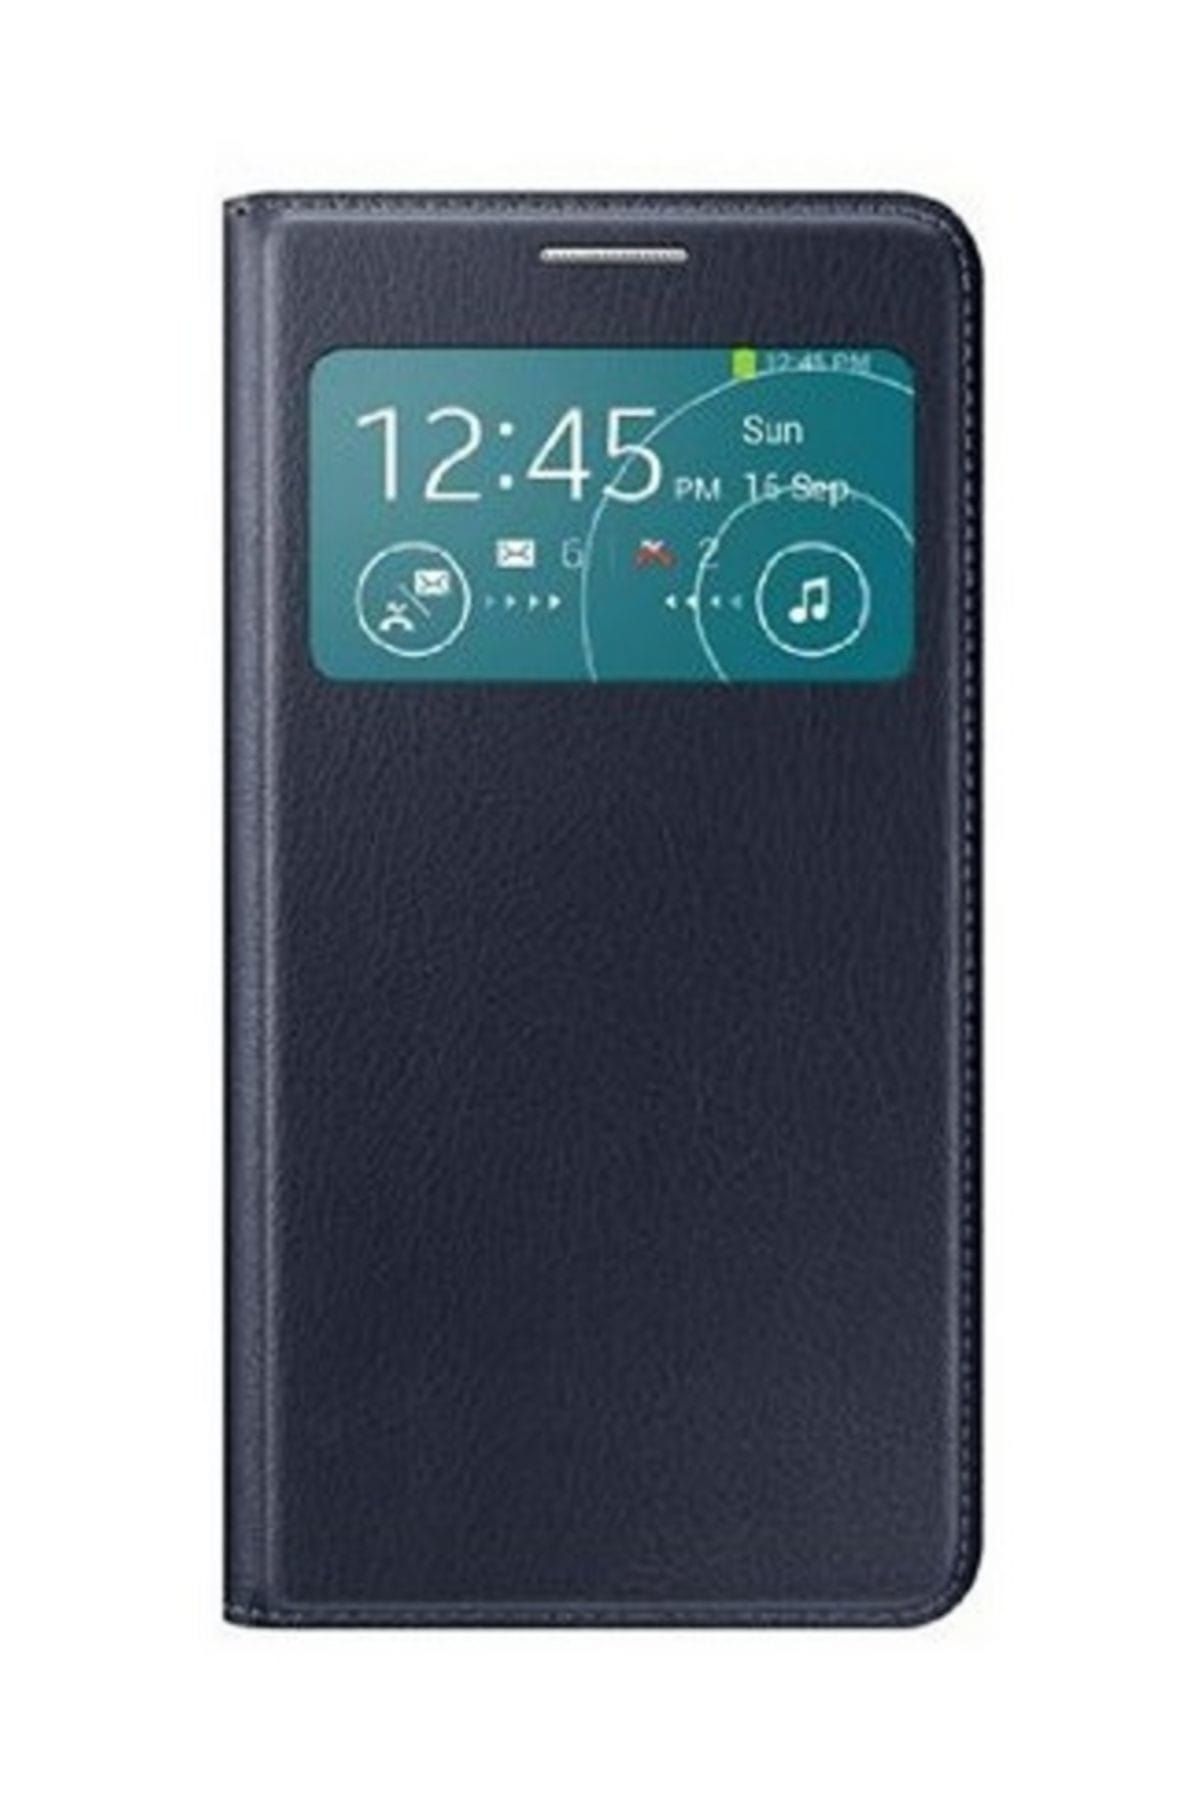 Samsung Galaxy S3 Neo (I9301) S View Orjinal Kılıf Mavi